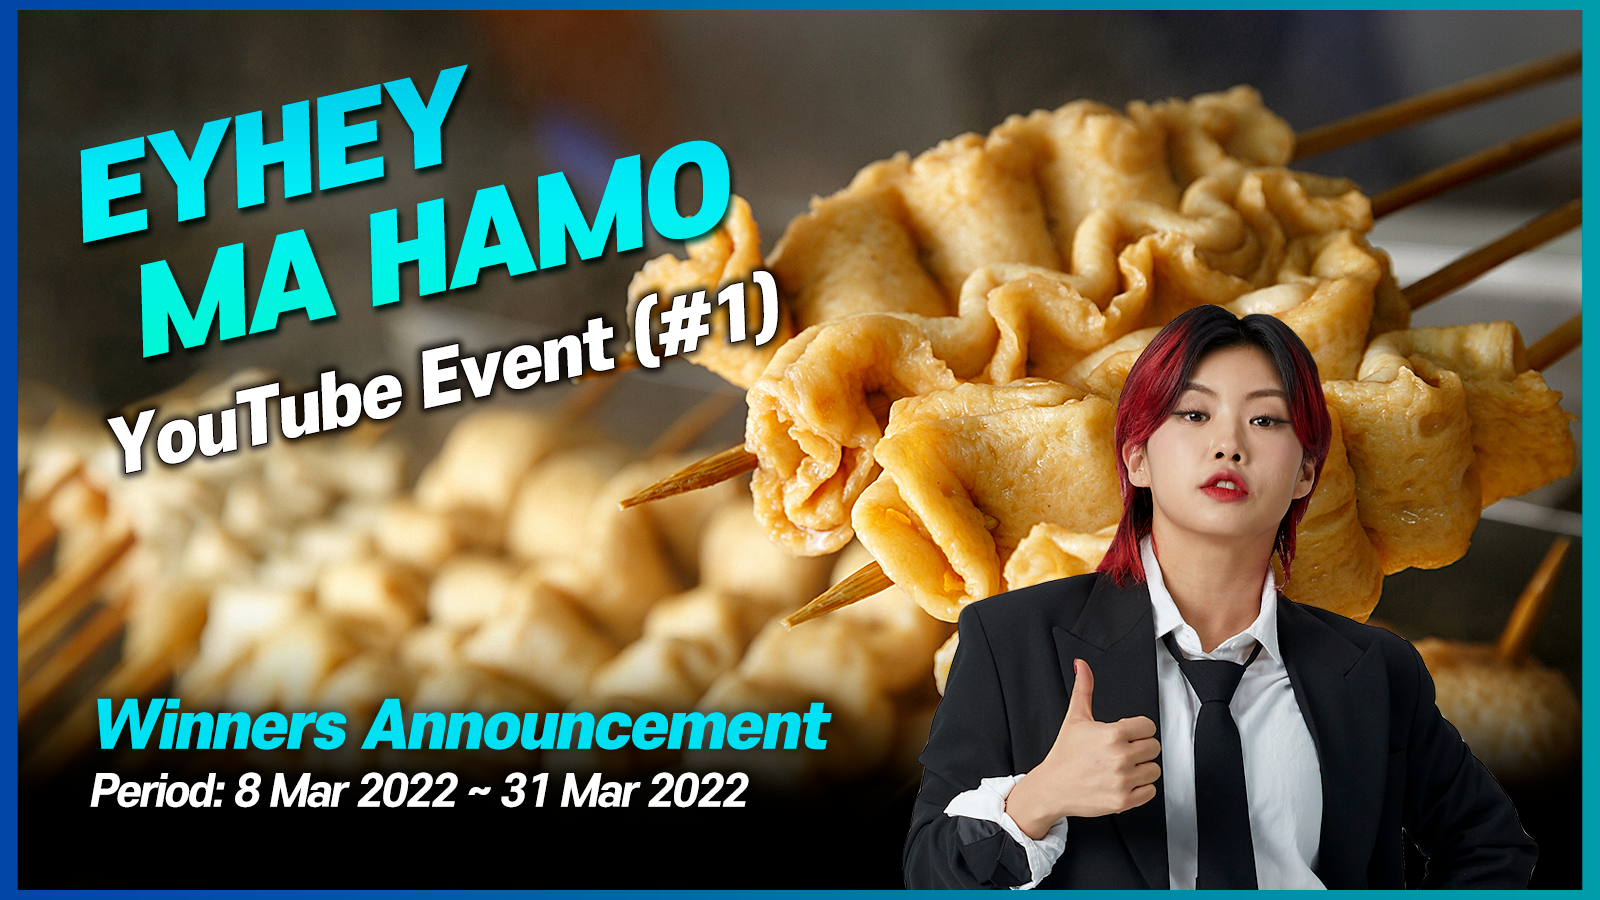 Winners Announcement : EYHEY MA HAMO YouTube Event(#1)